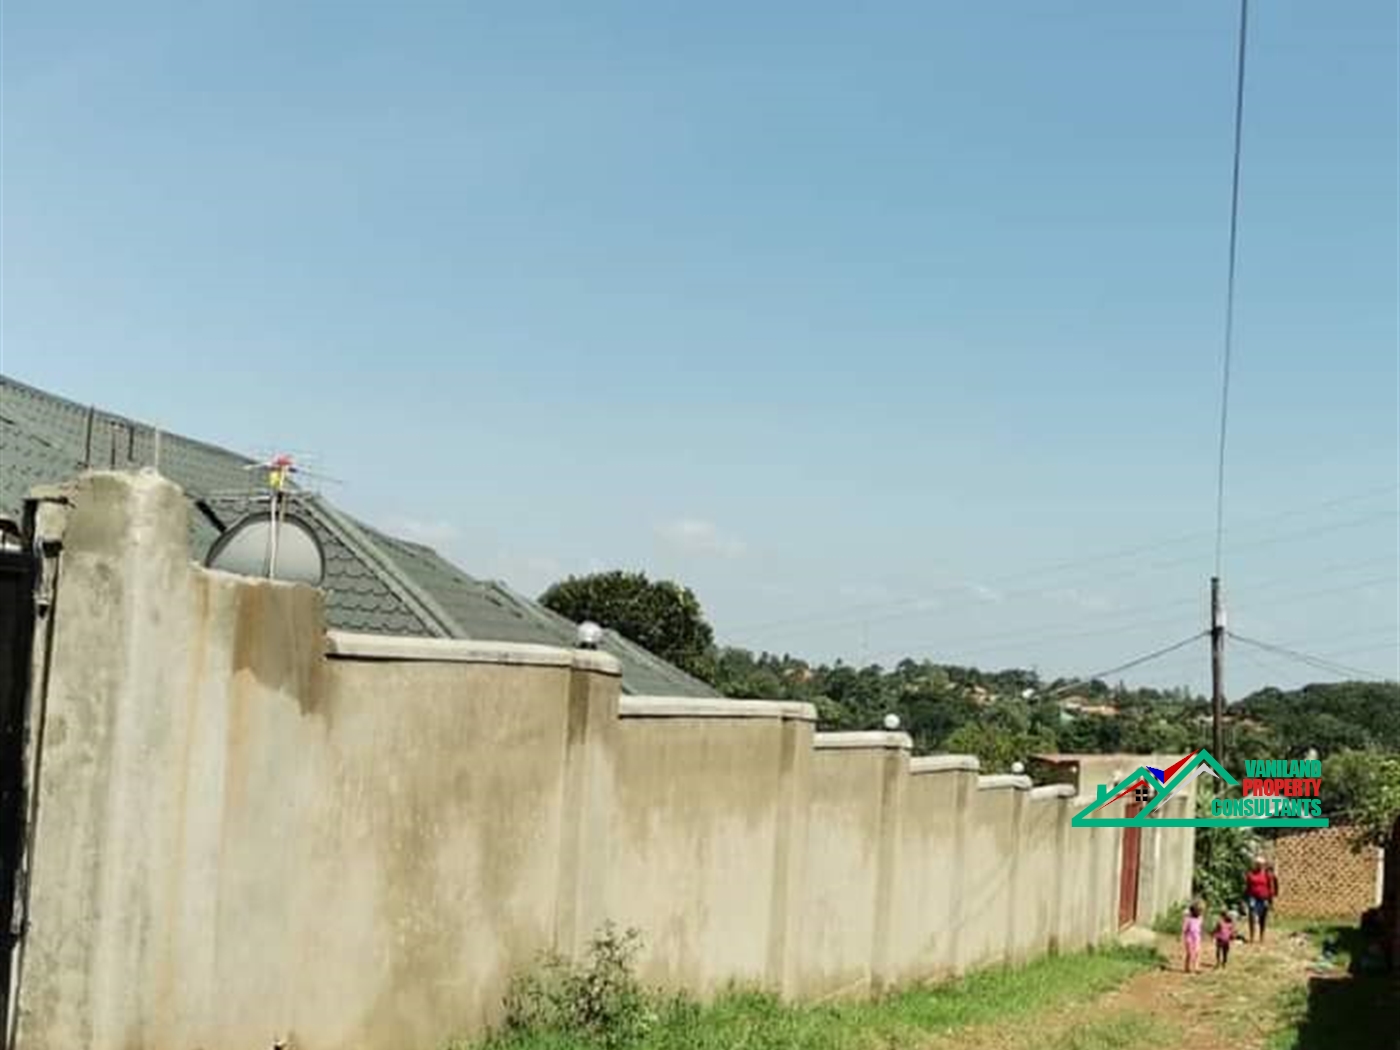 Rental units for sale in Mukono1 Mukono